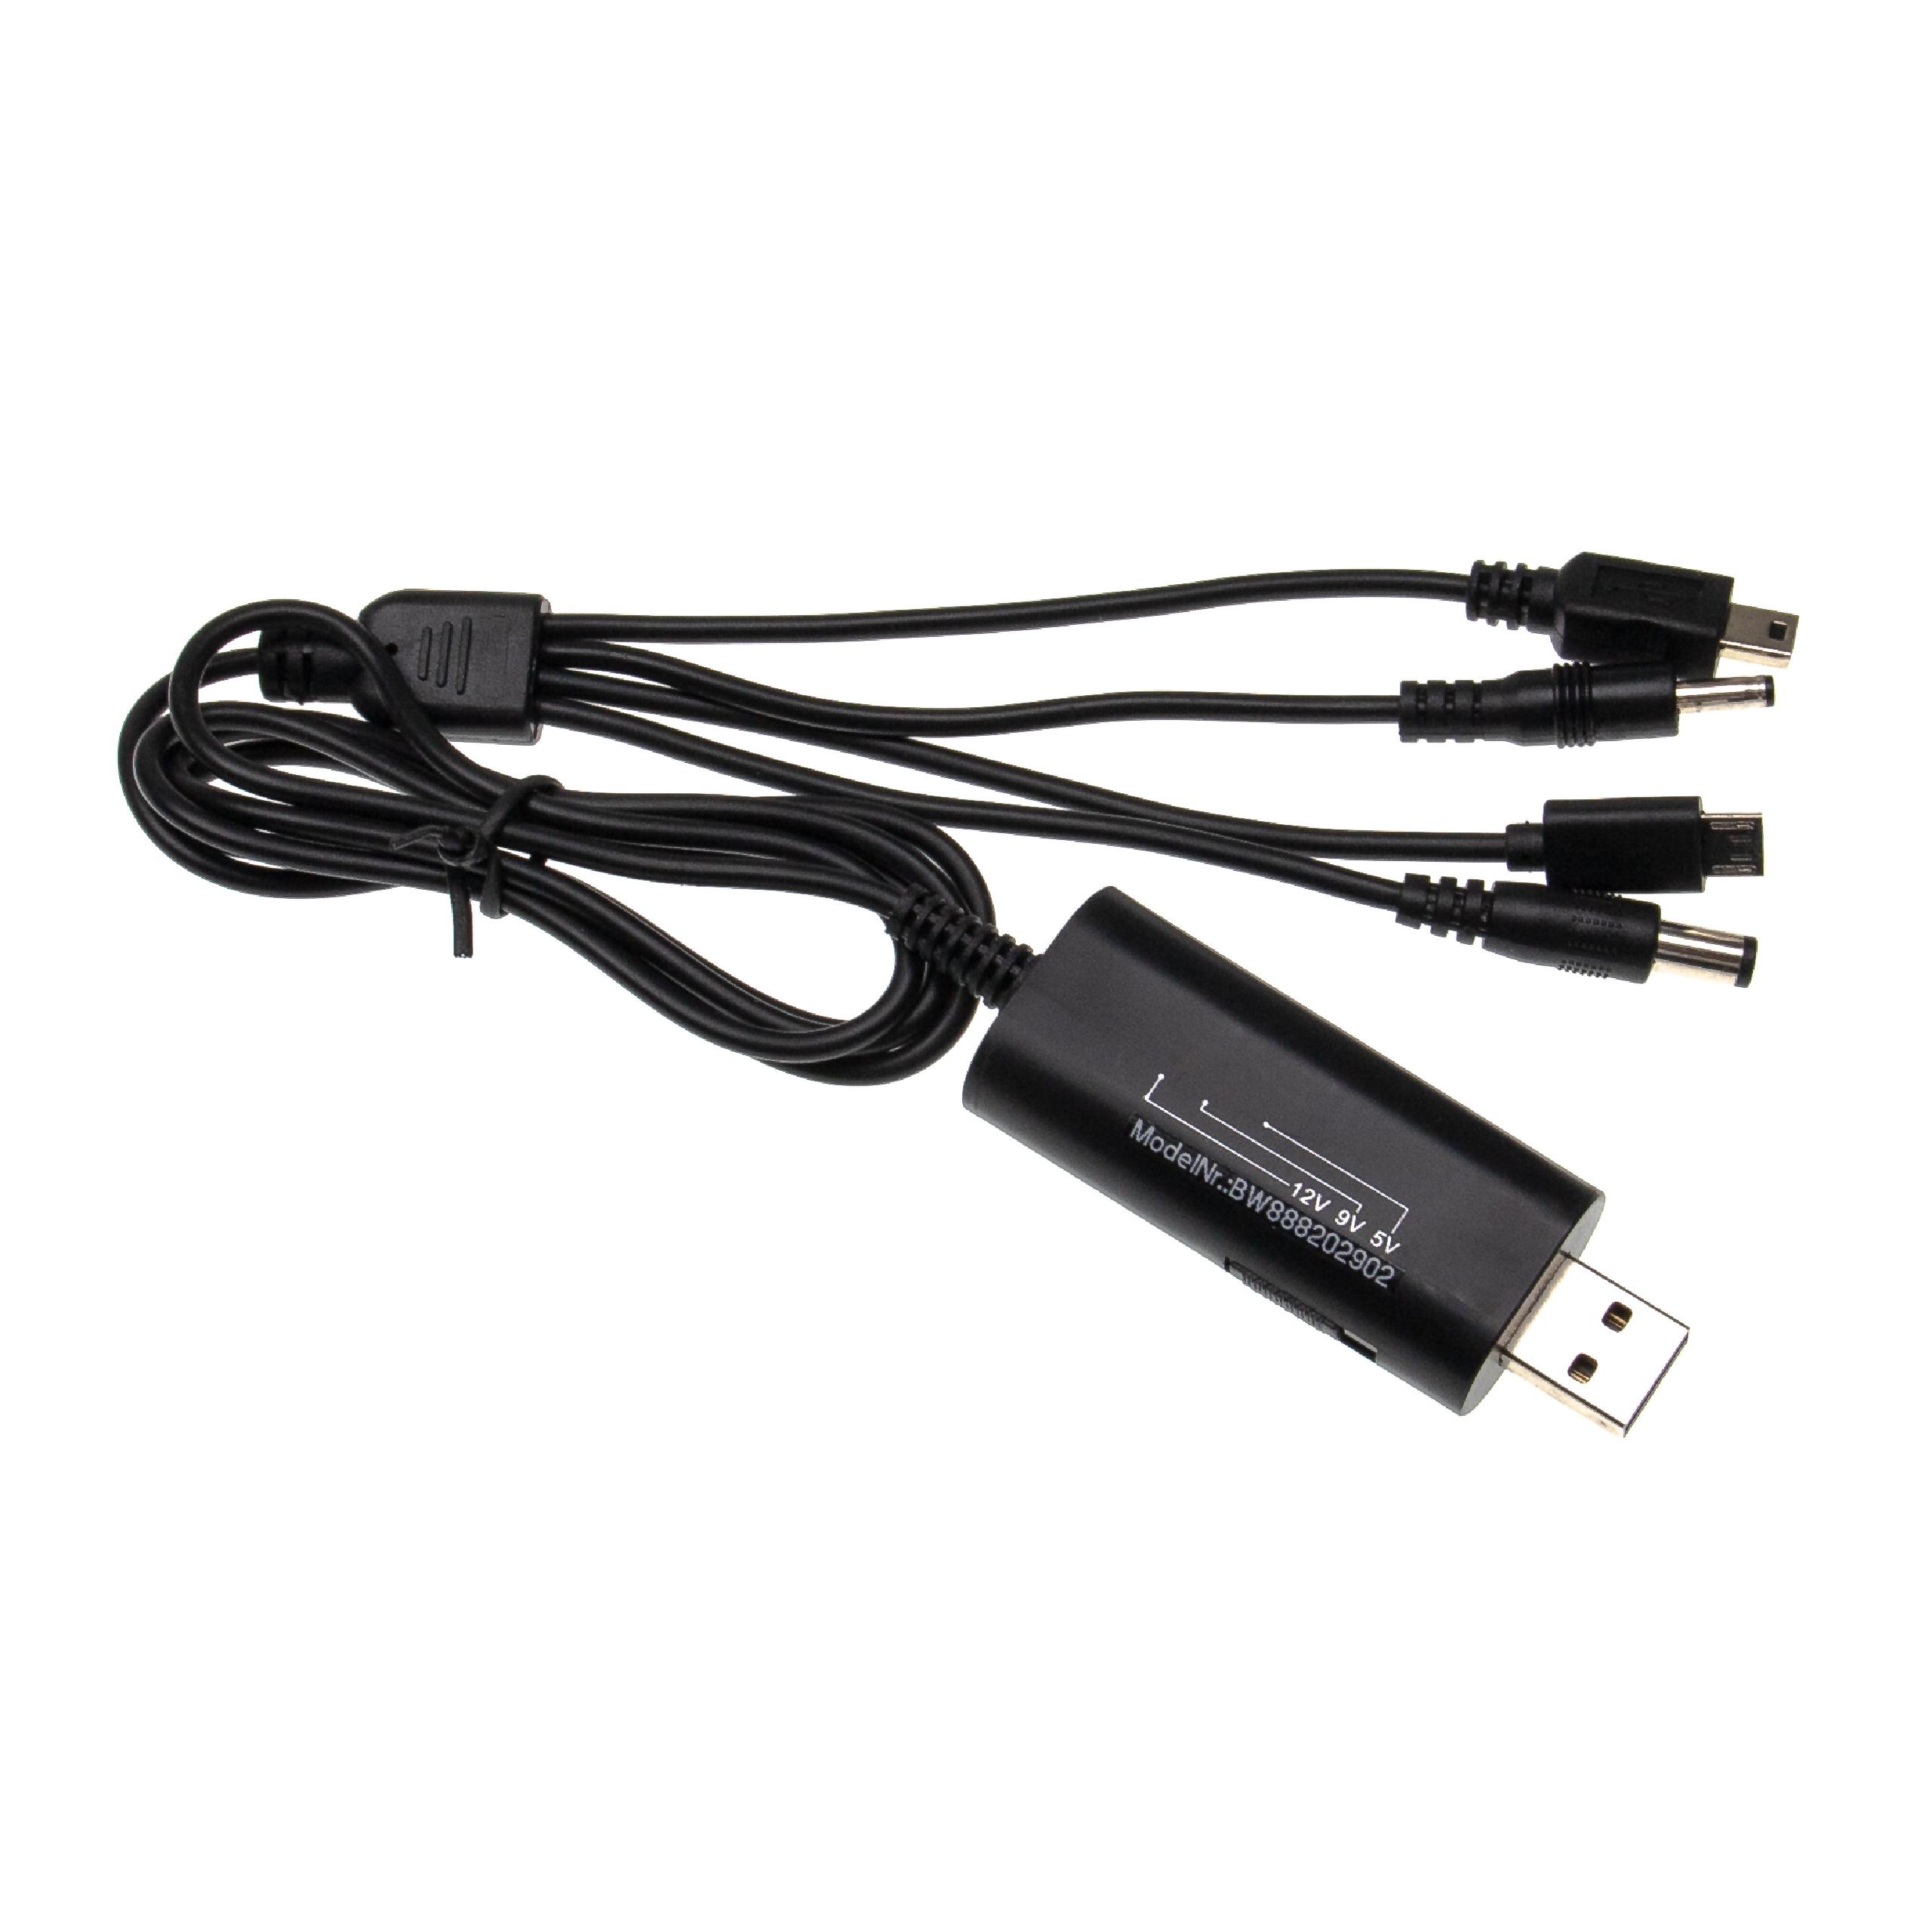 Uniwersalny kabel multi USB np. do telefonu, komórki, smartfona - 4w1, 120 cm